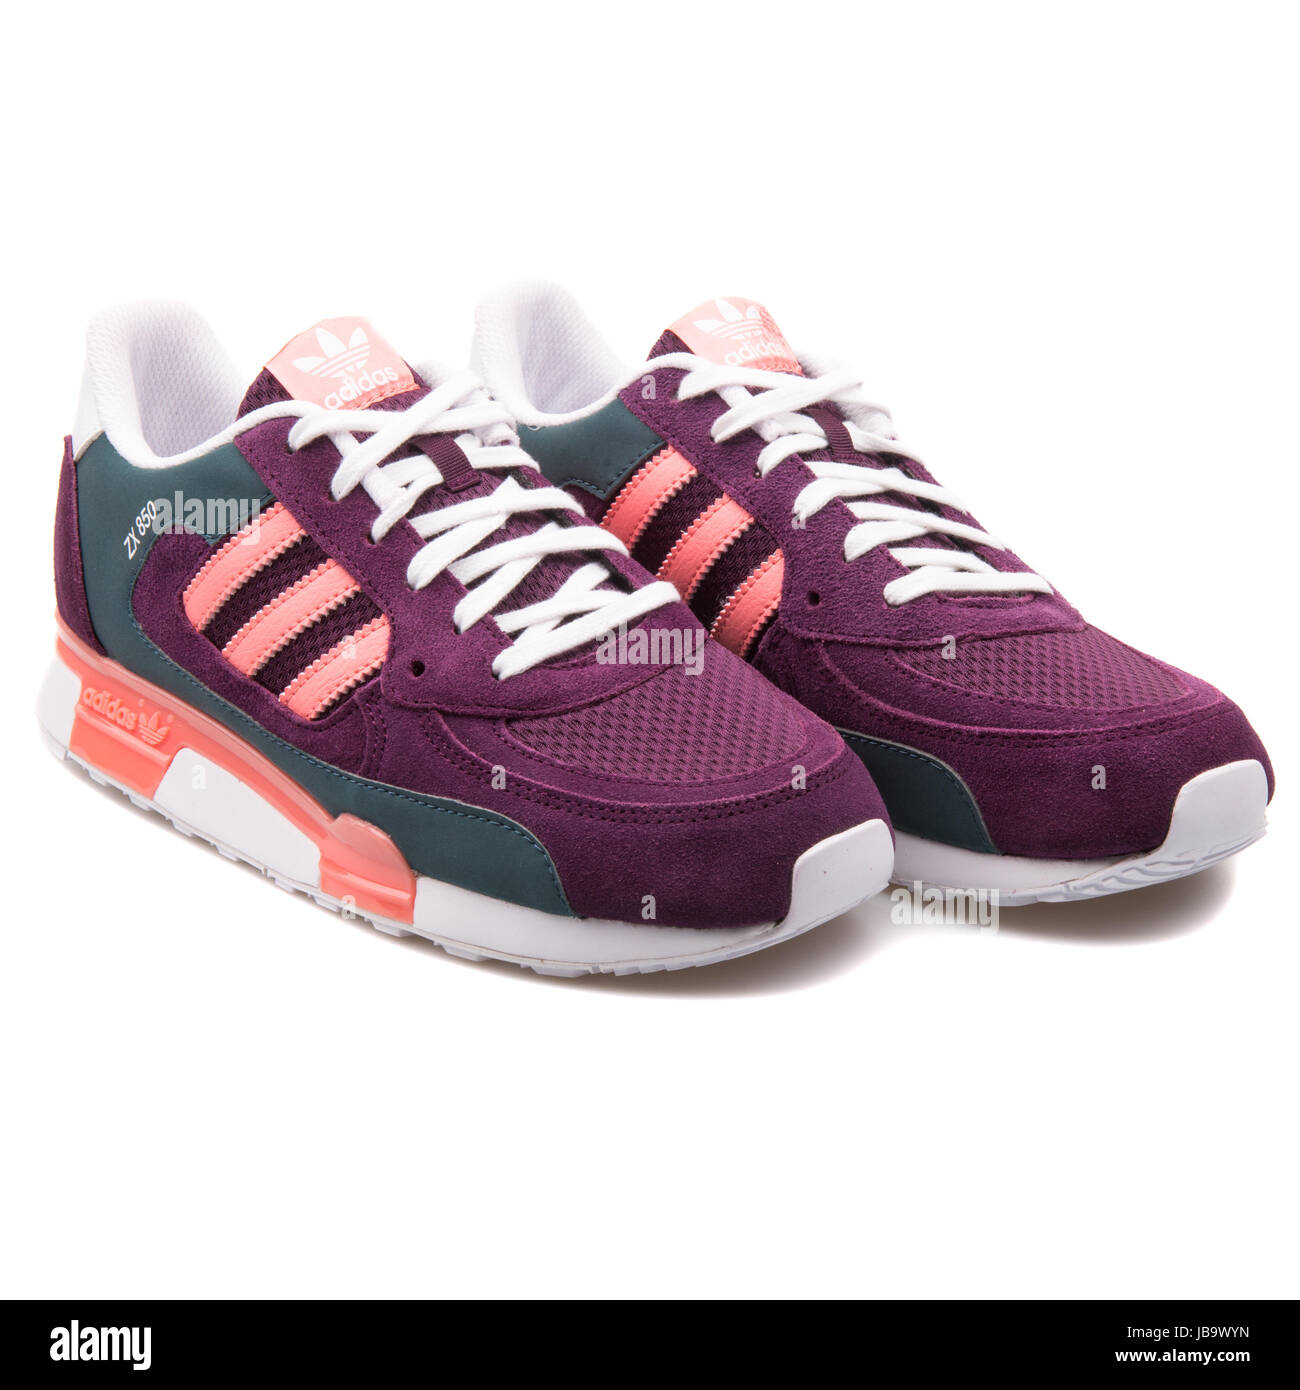 Adidas ZX 850 K Merlot Pink Youth's Sports Sneakers - B25563 Stock Photo -  Alamy